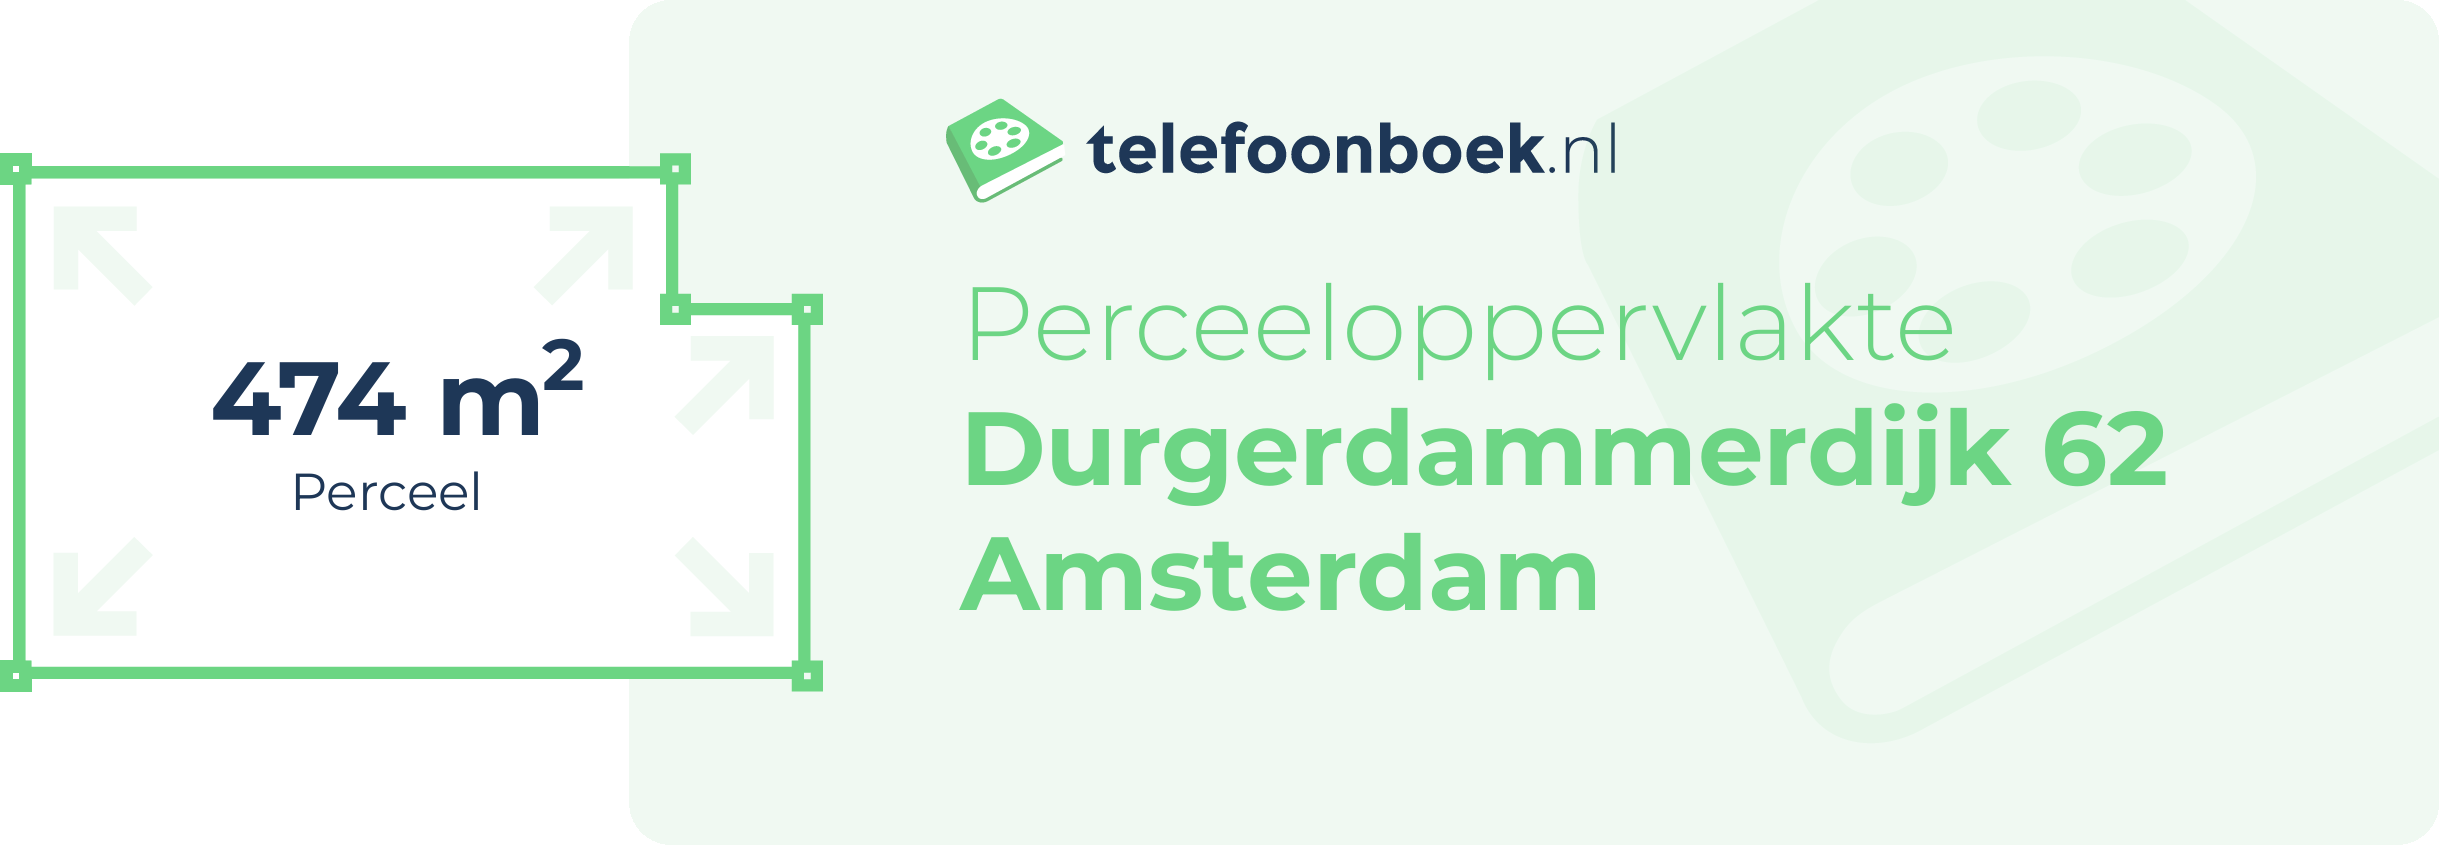 Perceeloppervlakte Durgerdammerdijk 62 Amsterdam